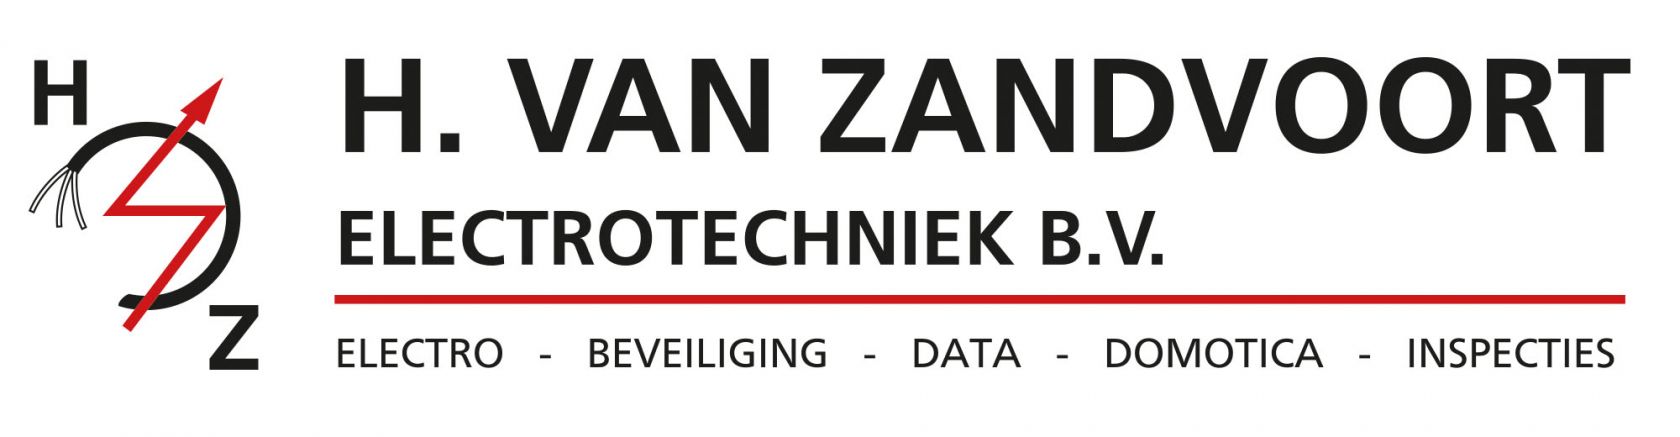 H. van Zandvoort Electrotechniek B.V.